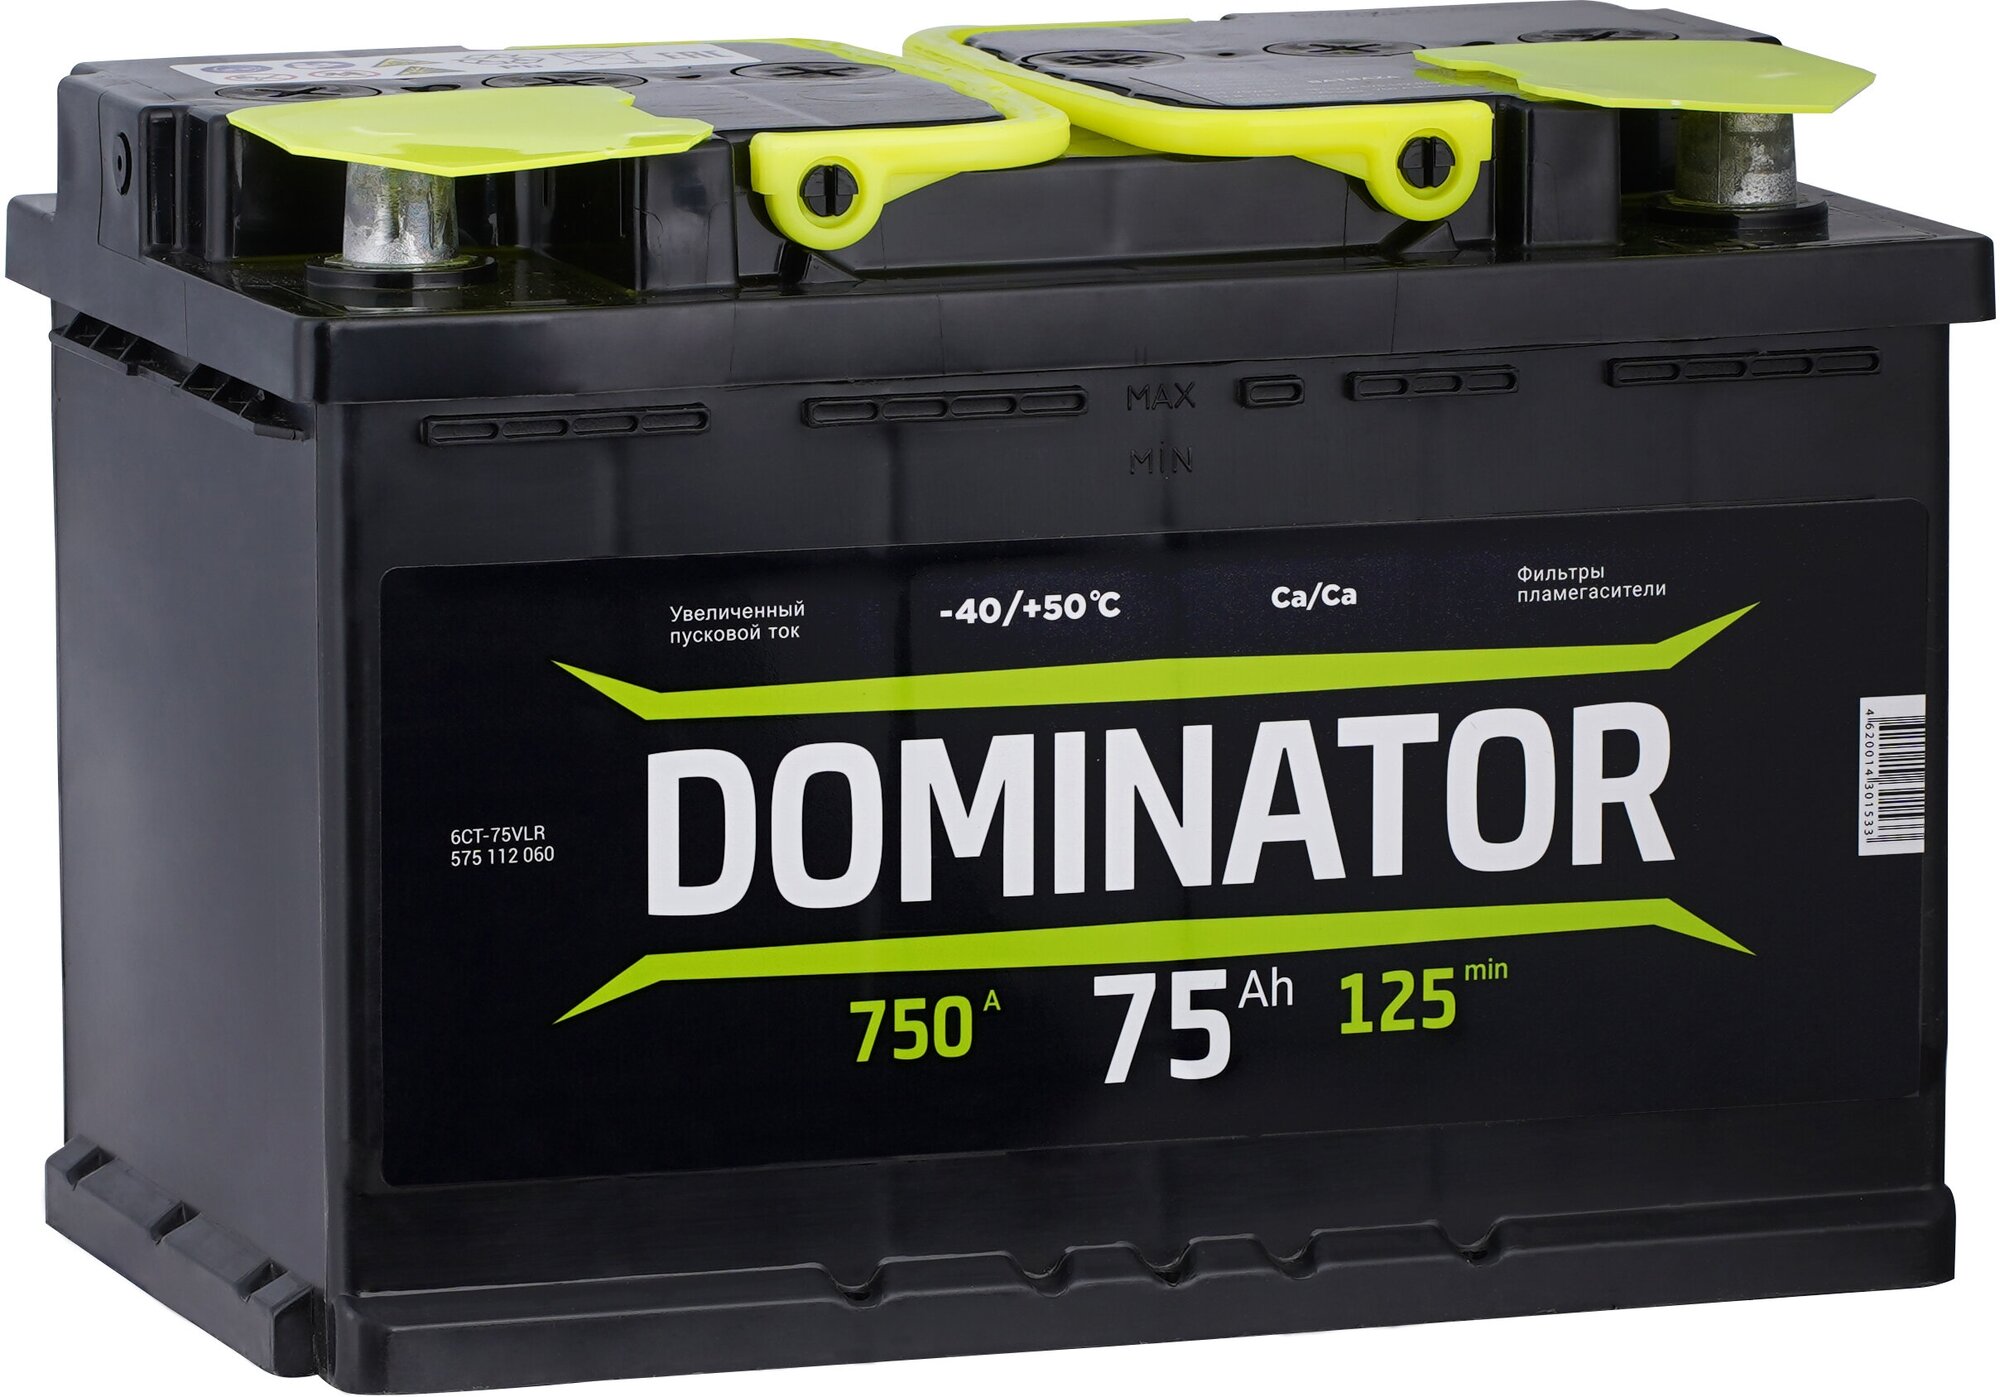 Автомобильный аккумулятор Dominator 75 Ач (0) 6СТ-75VLR, 750 A